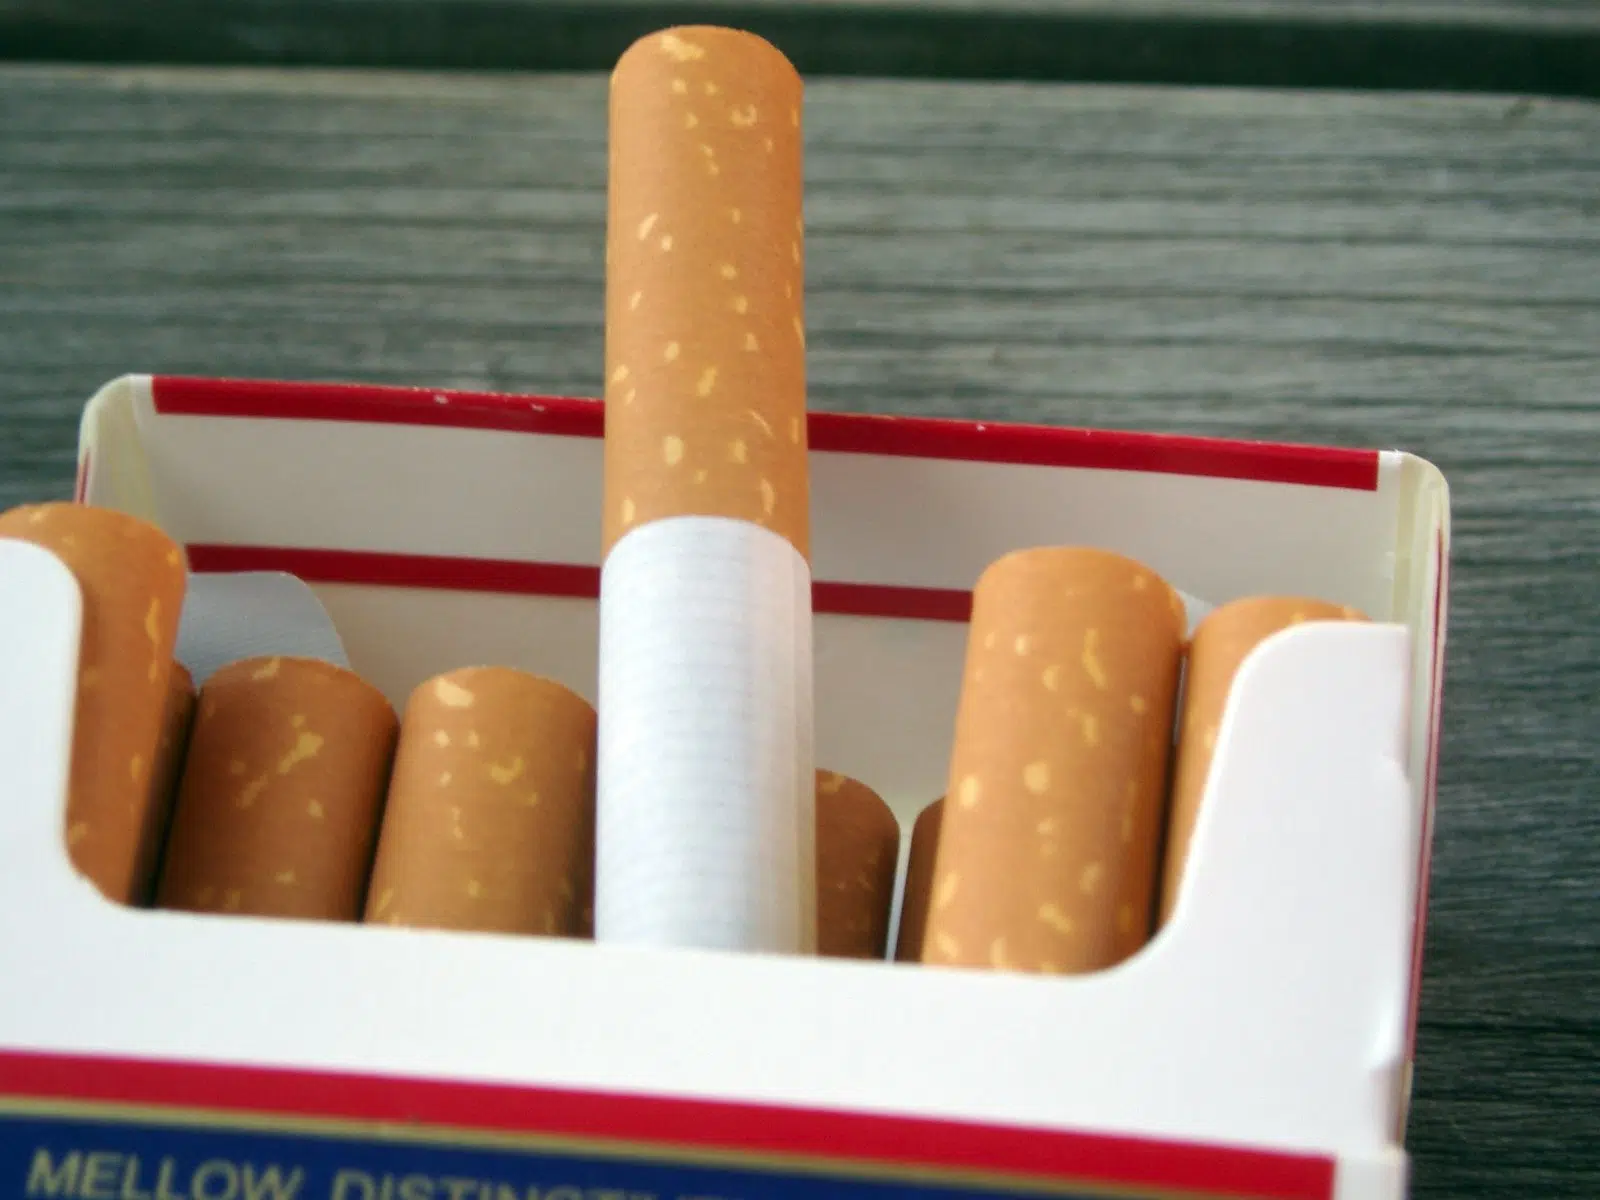 Most Corner Stores Check Age For Cigarettes: Province